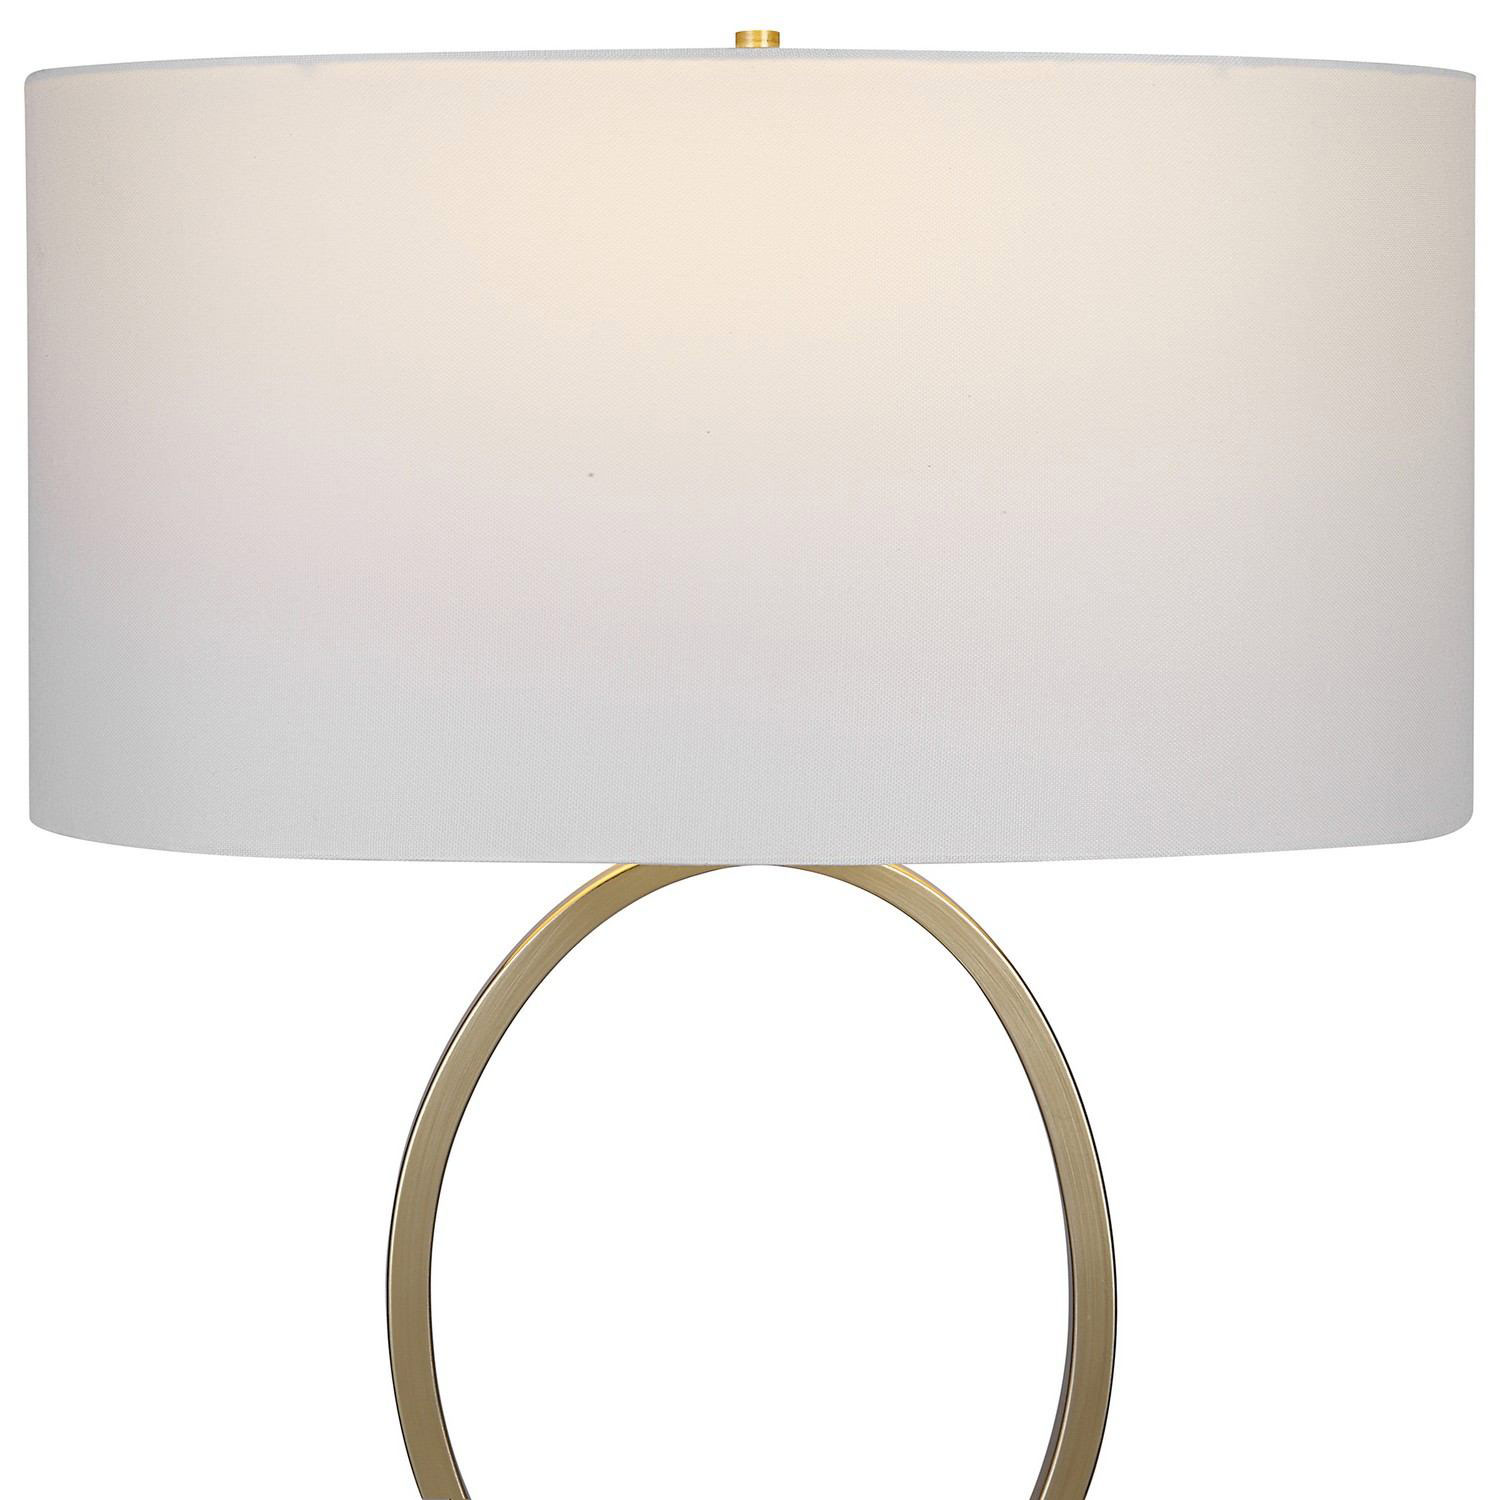 Uttermost W26083-1 Table Lamp - Golden Brass